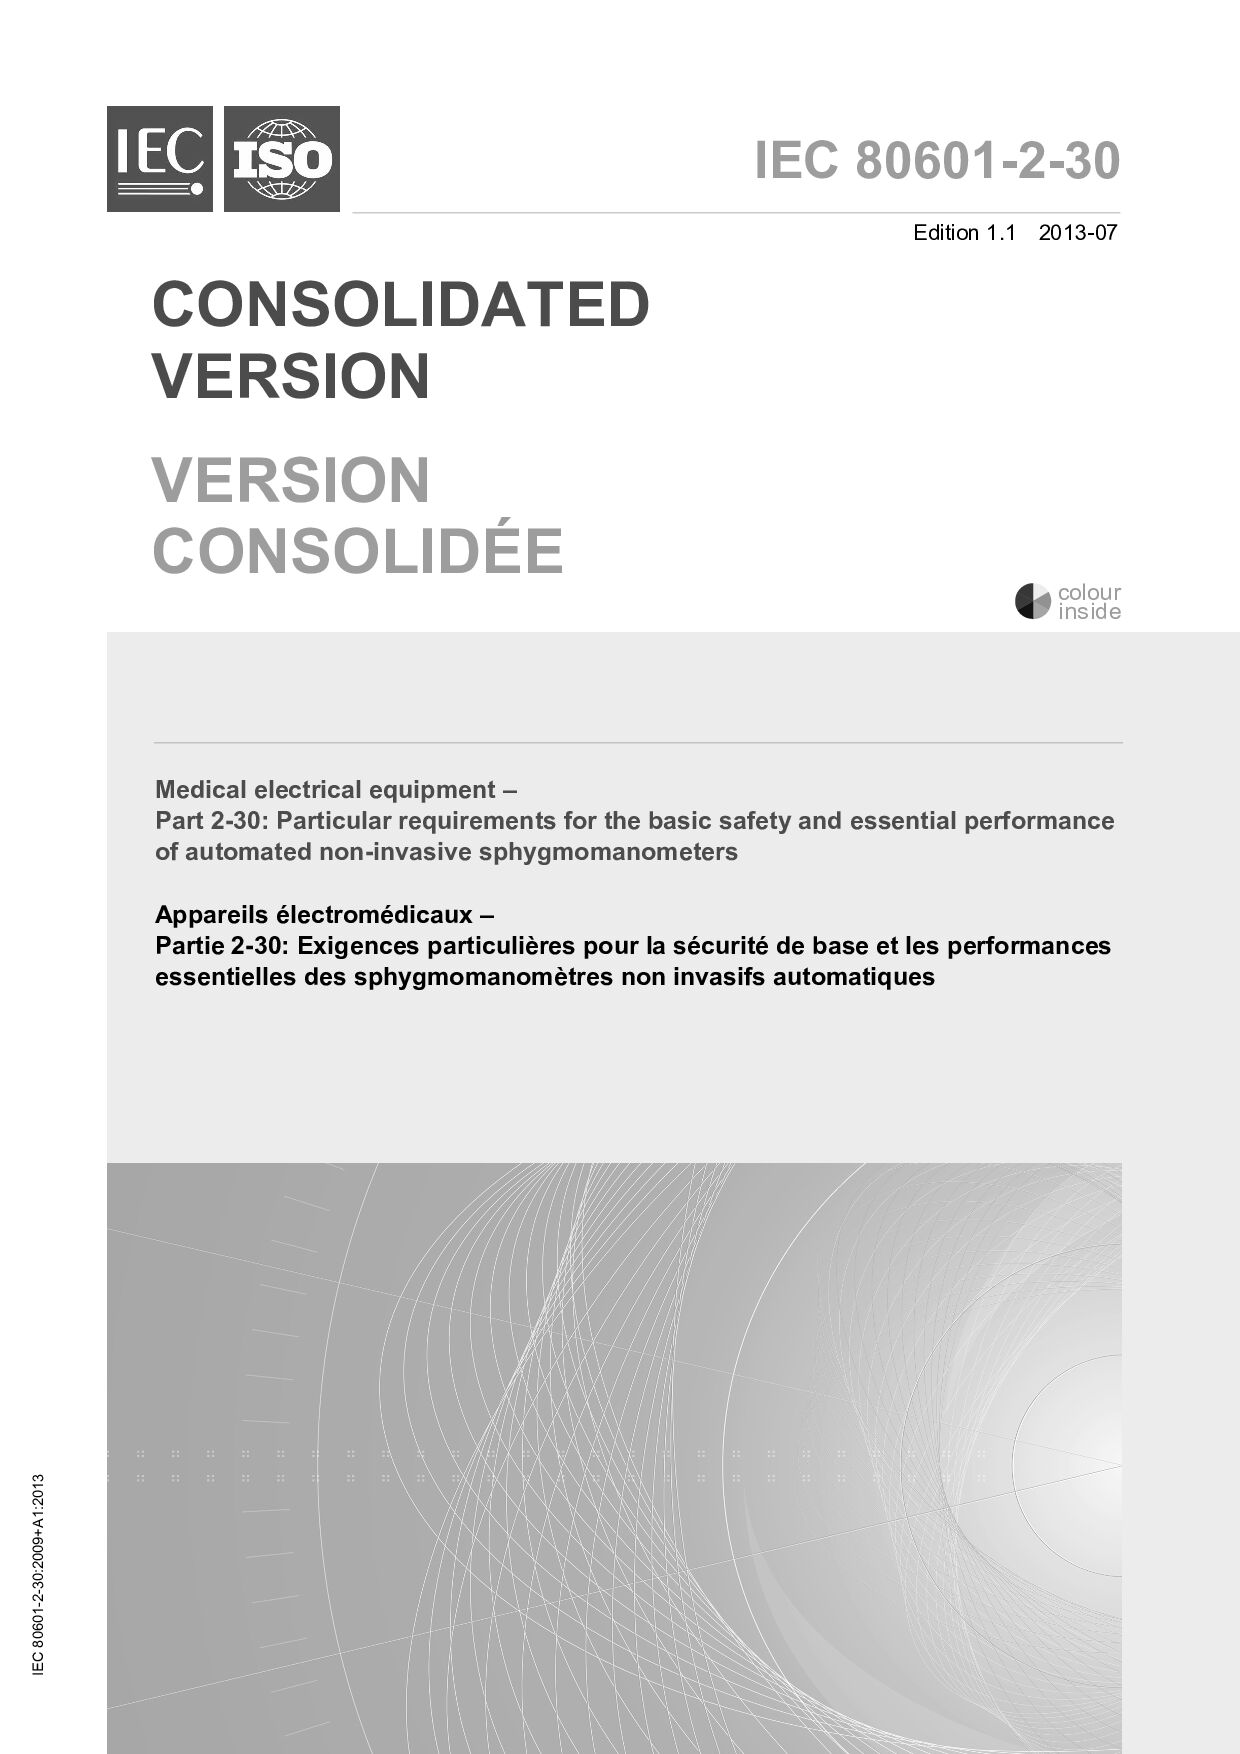 IEC 80601-2-30 Edition 1.1-2013